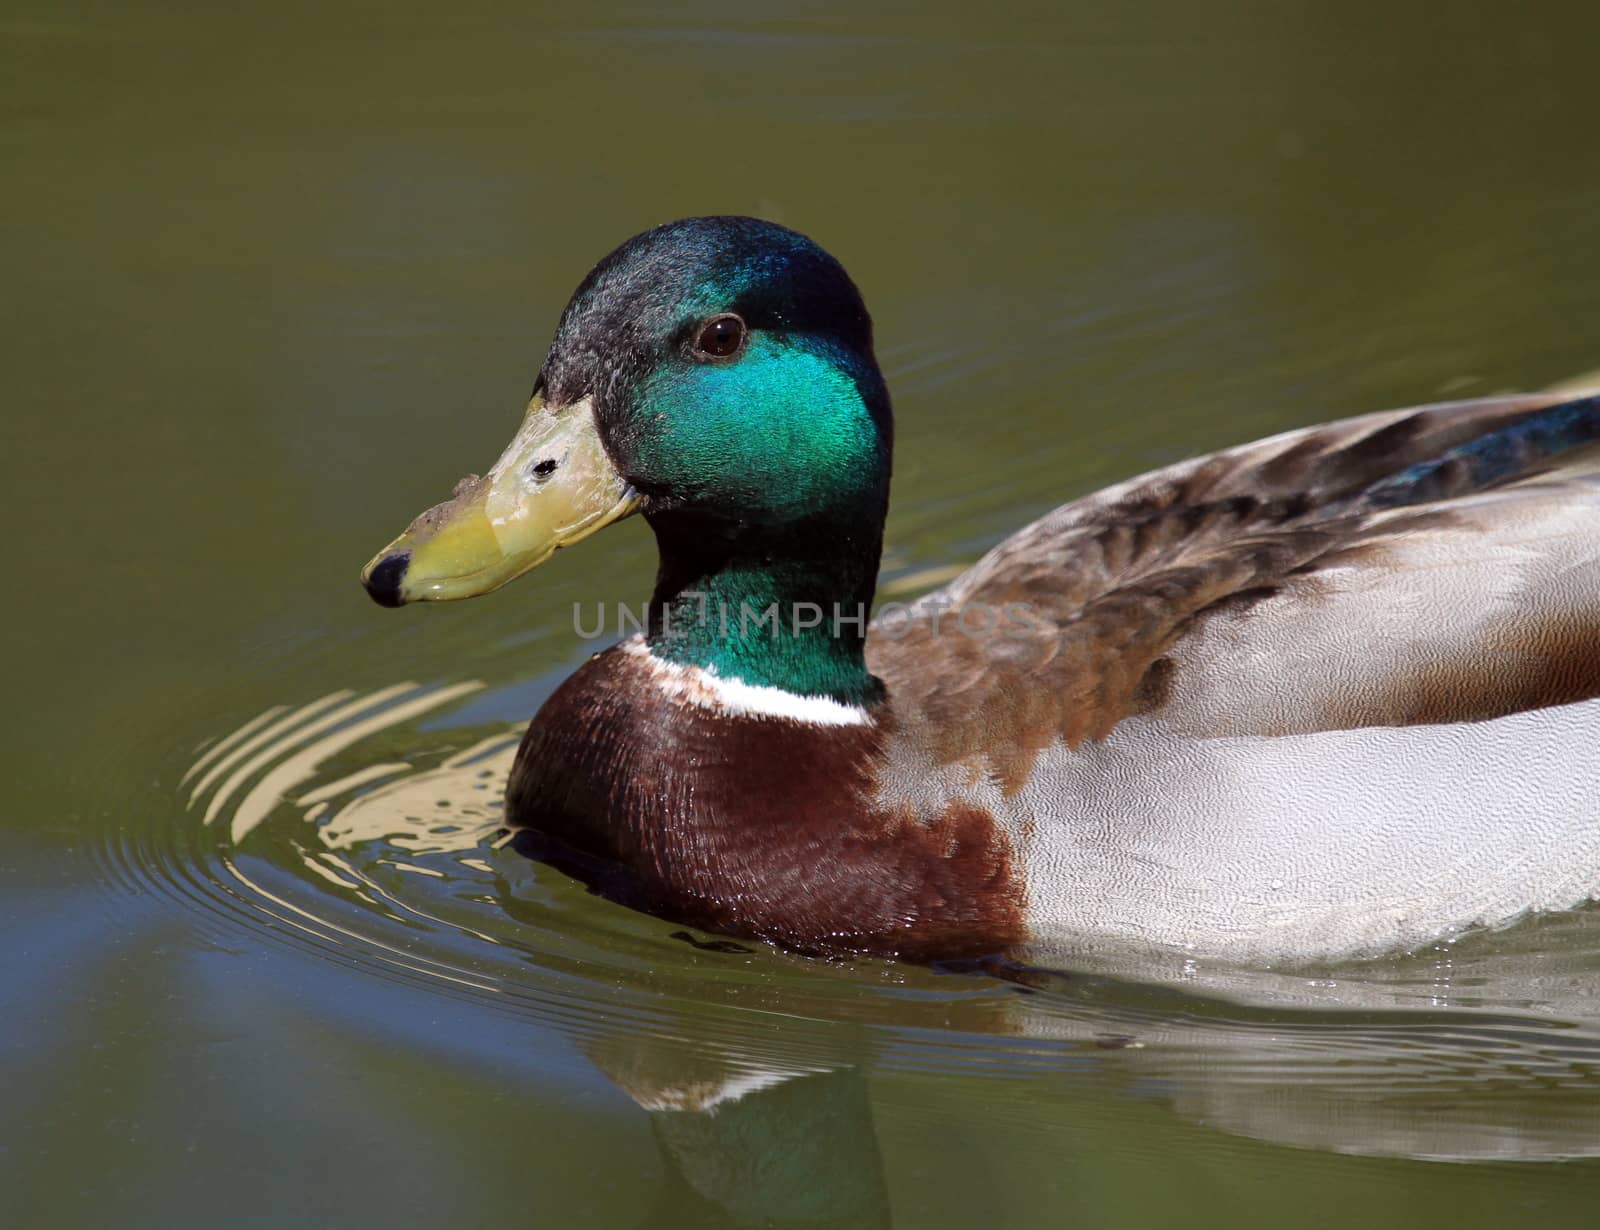 Beautiful male mallard duck swimming on quiet brown water